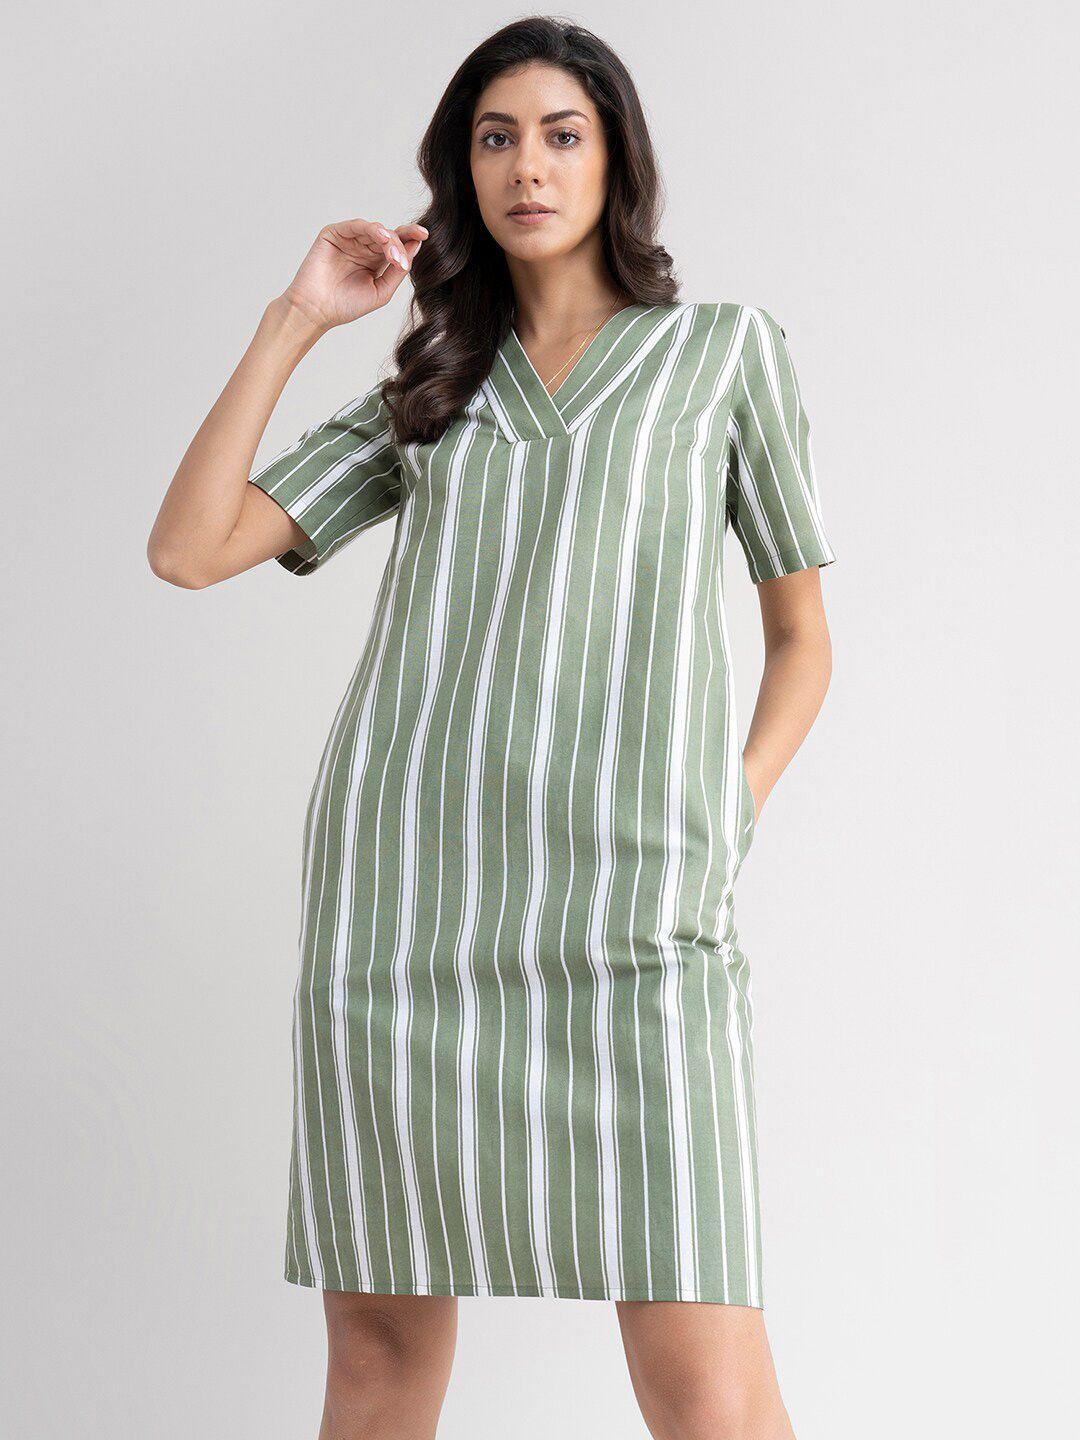 fablestreet-olive-green-&-white-striped-linen-formal-a-line-dress